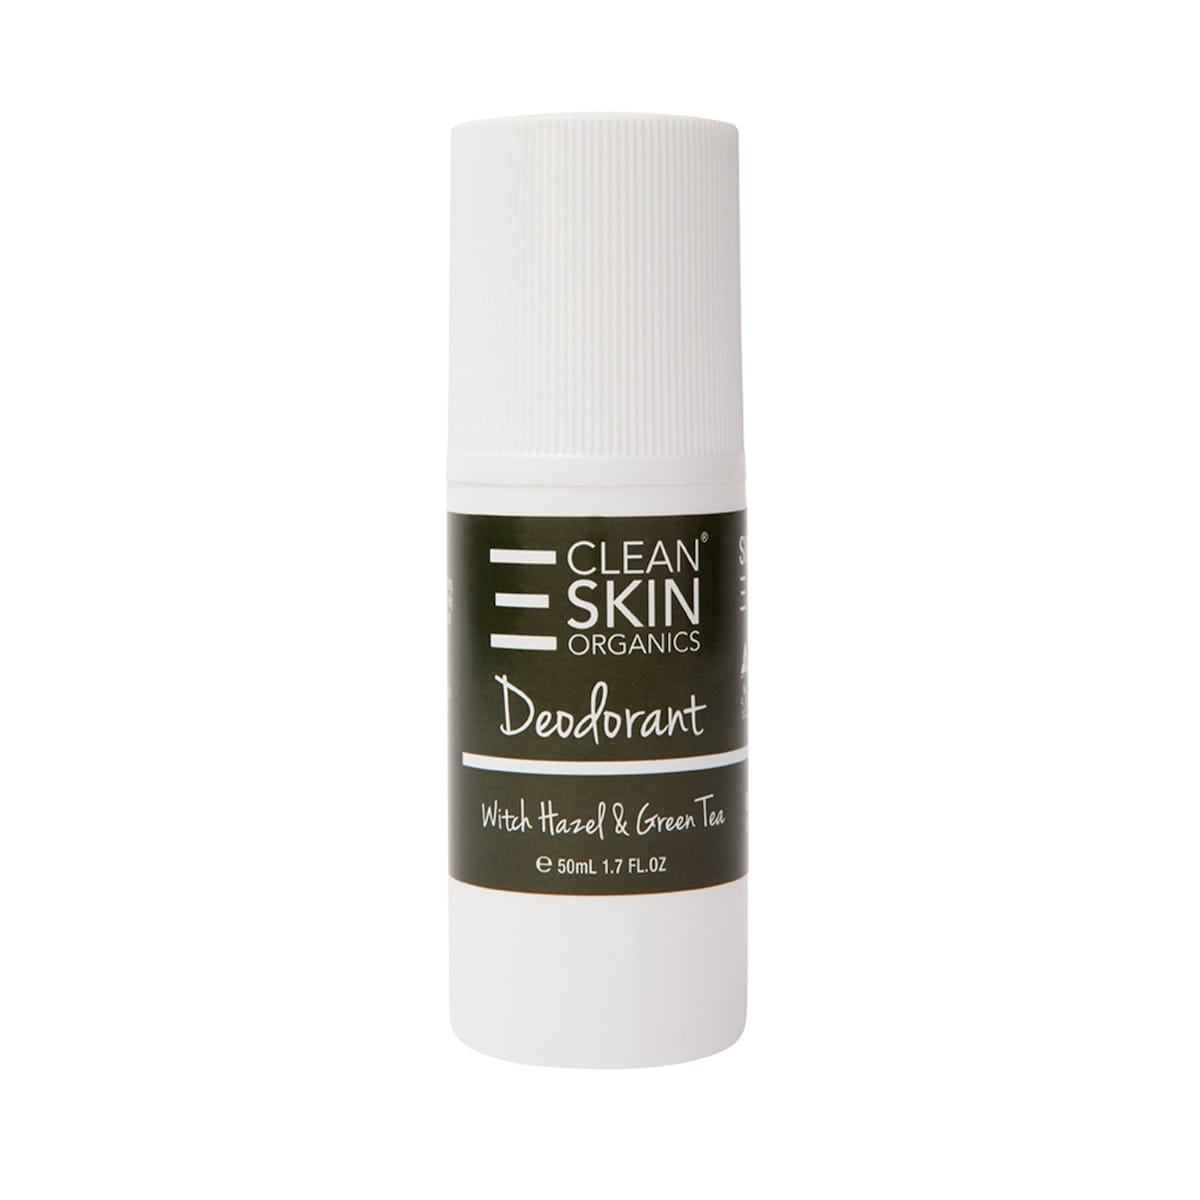 Clean Skin Organics Deodorant Witch Hazel and Green Tea 50ml